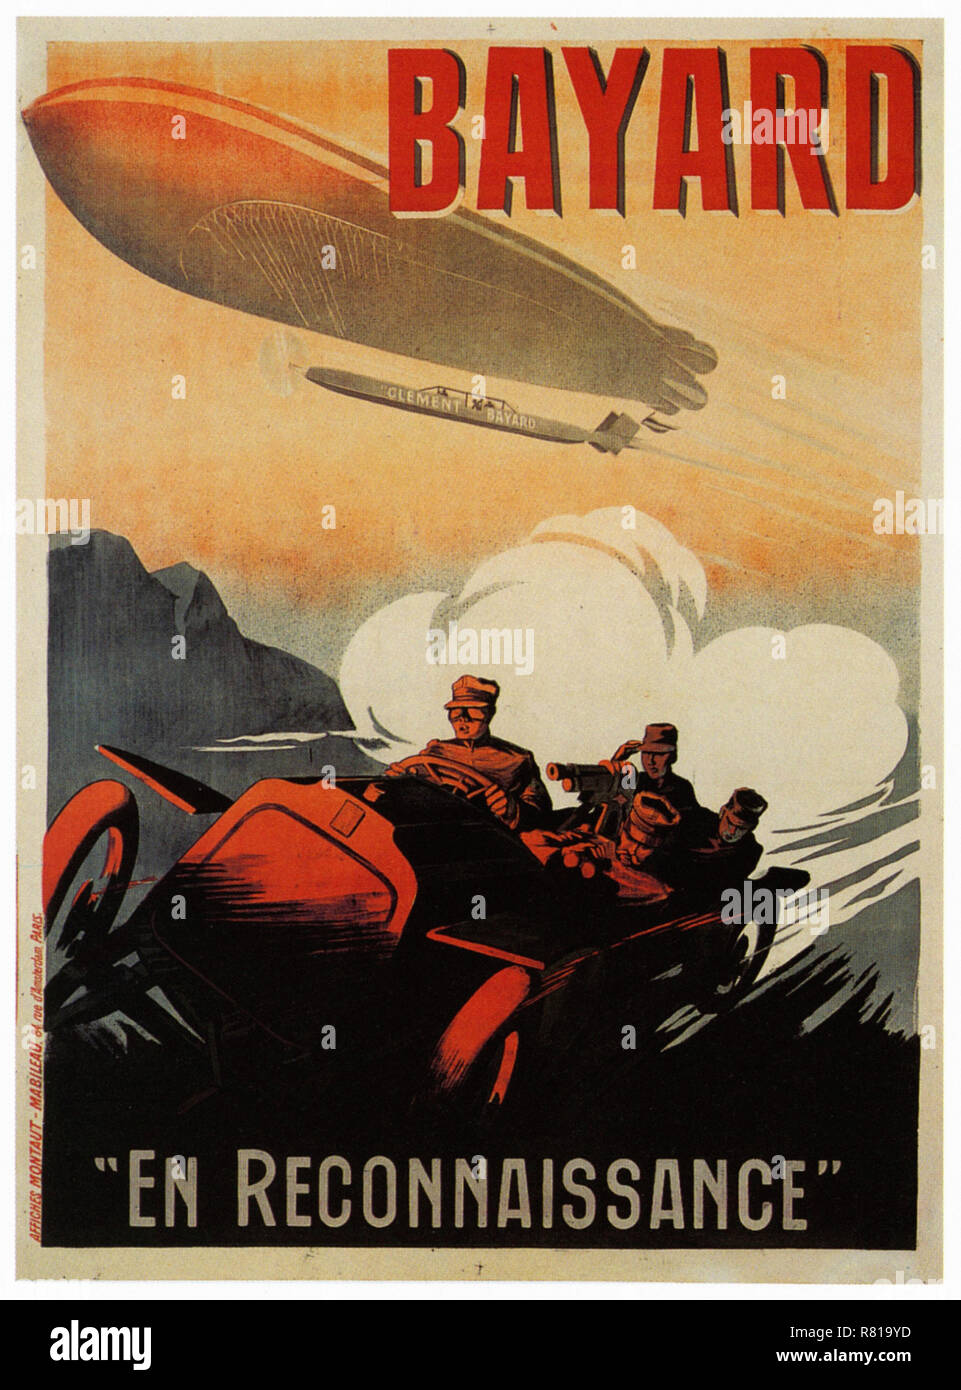 Clemente Bayard 'En ricognizione' Zeppelin - Vintage auto del poster pubblicitario Foto Stock